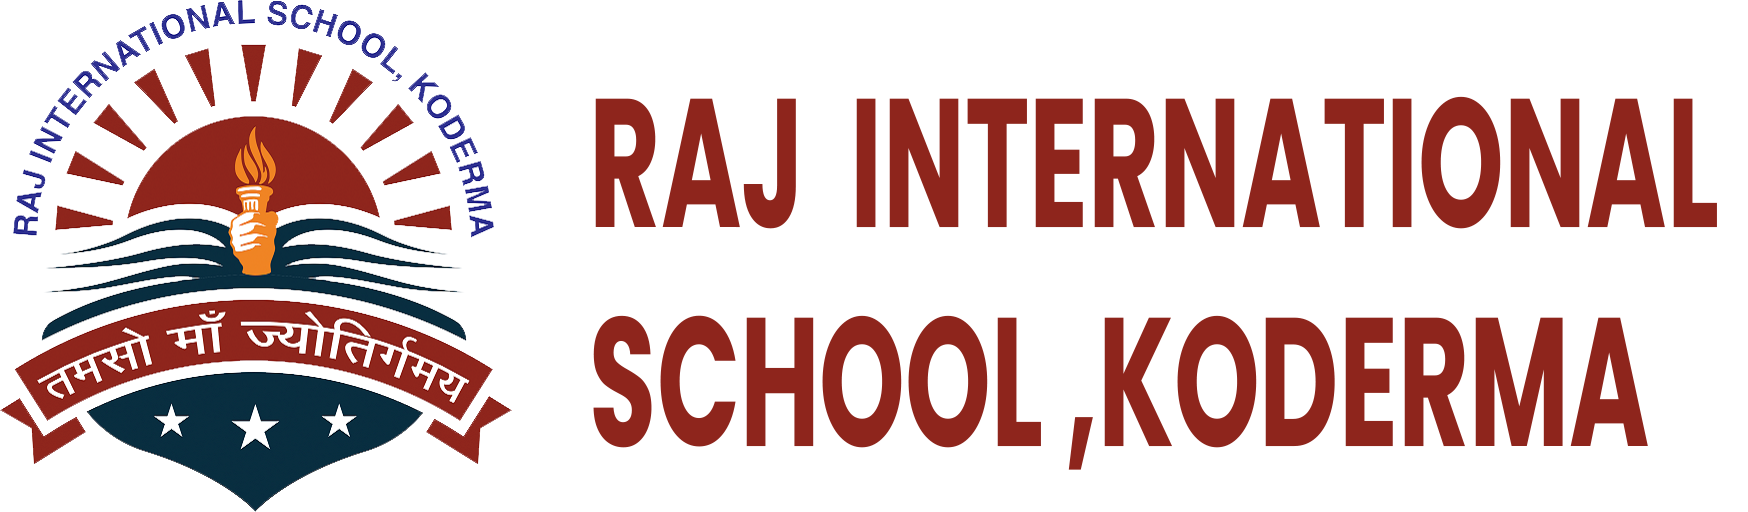 RAJ INTERNATIONAL SCHOOL